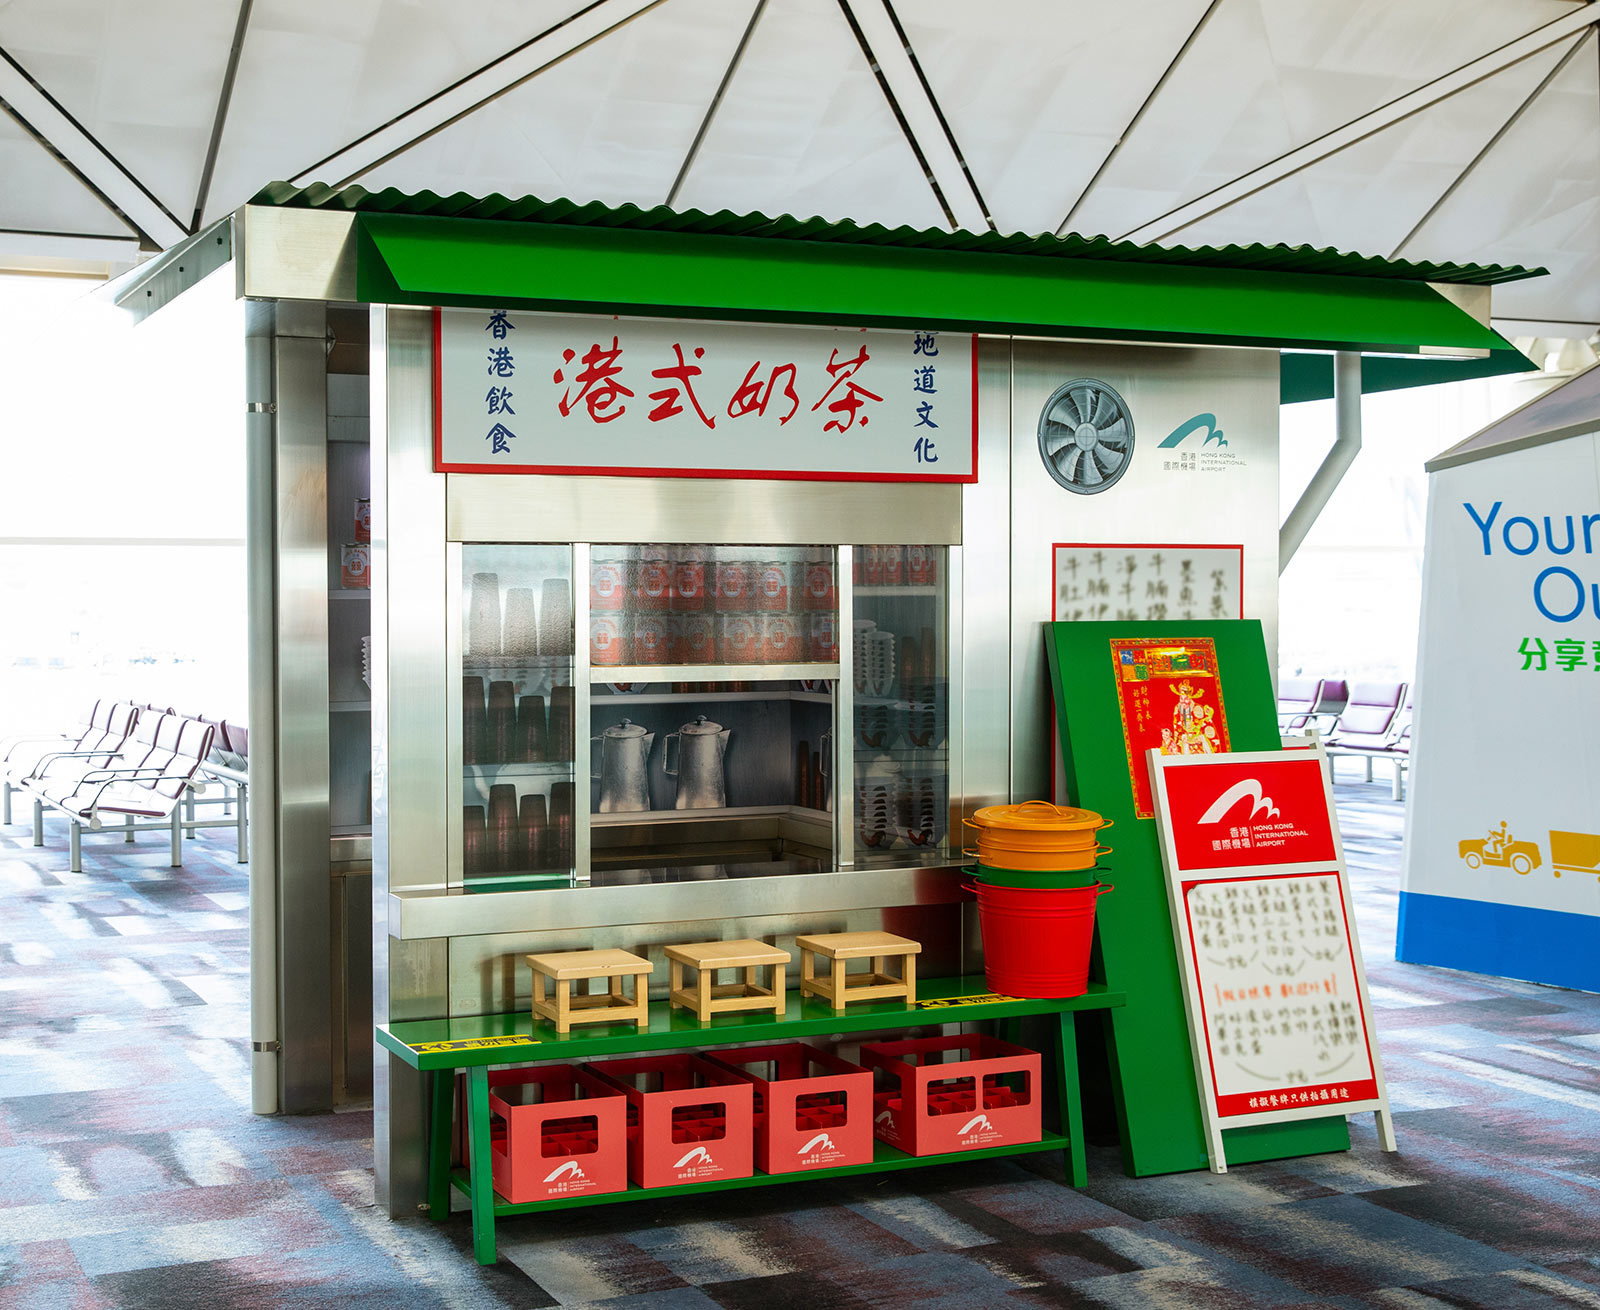 Hong Kong International Airport Cultural